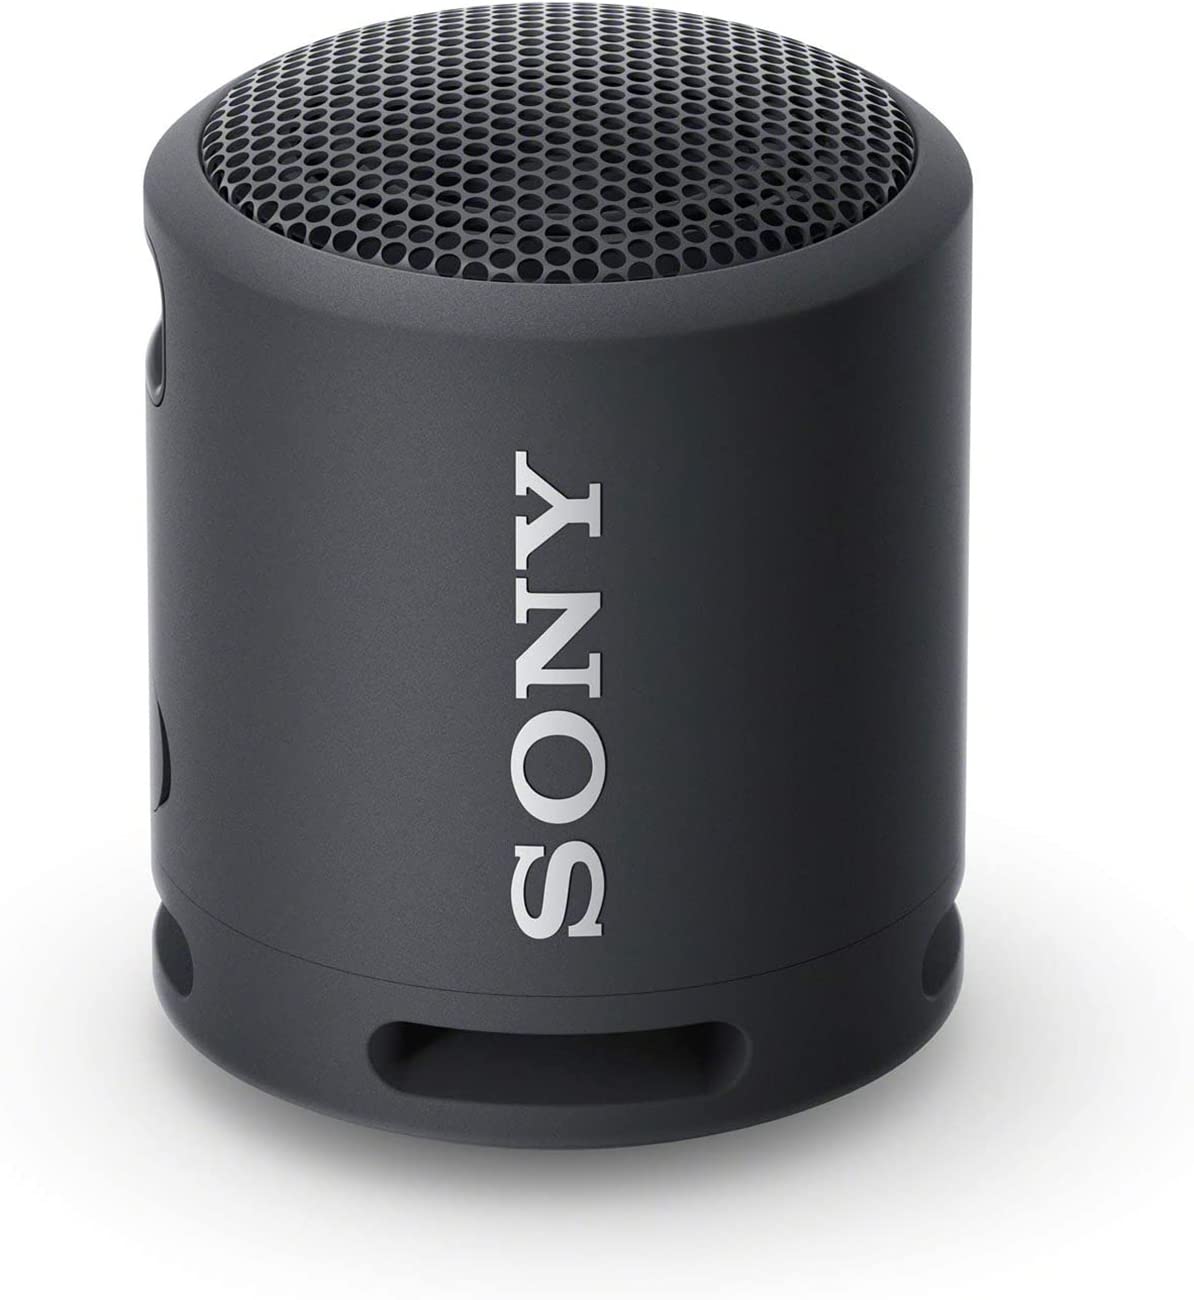  Sony SRS-XB13 EXTRA BASS ワイヤレス Bluetooth ポータブル 軽量 コンパクト トラベル スピーカー、IP67 防水性と耐久性、屋外用、16 時間バッテリー、USB Type-C...